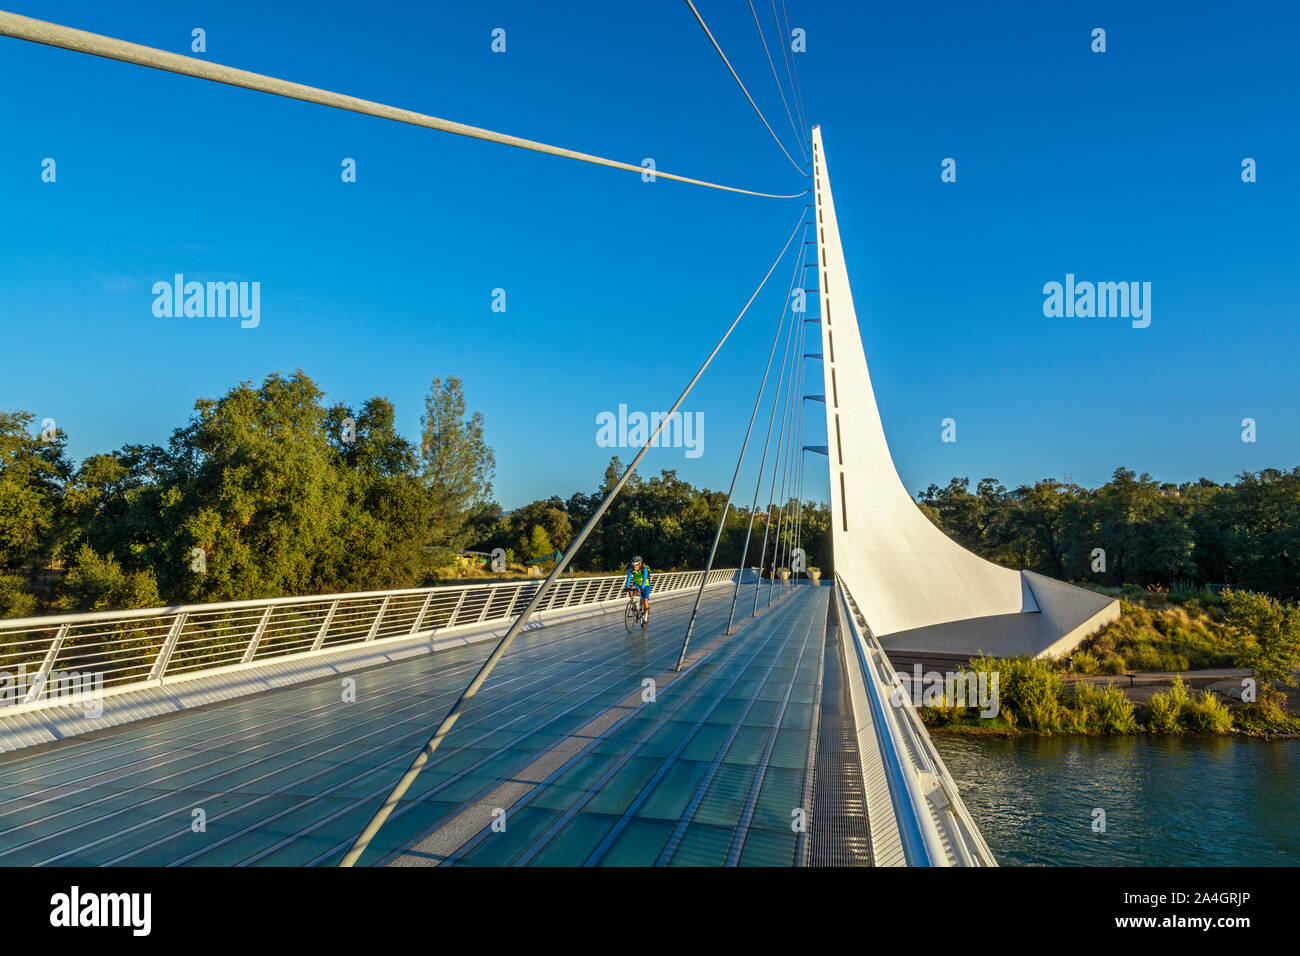 California, Redding, Sundial Bridge at Turtle Bay Exploration Park, spans Sacramento River, bicyclist Stock Photo